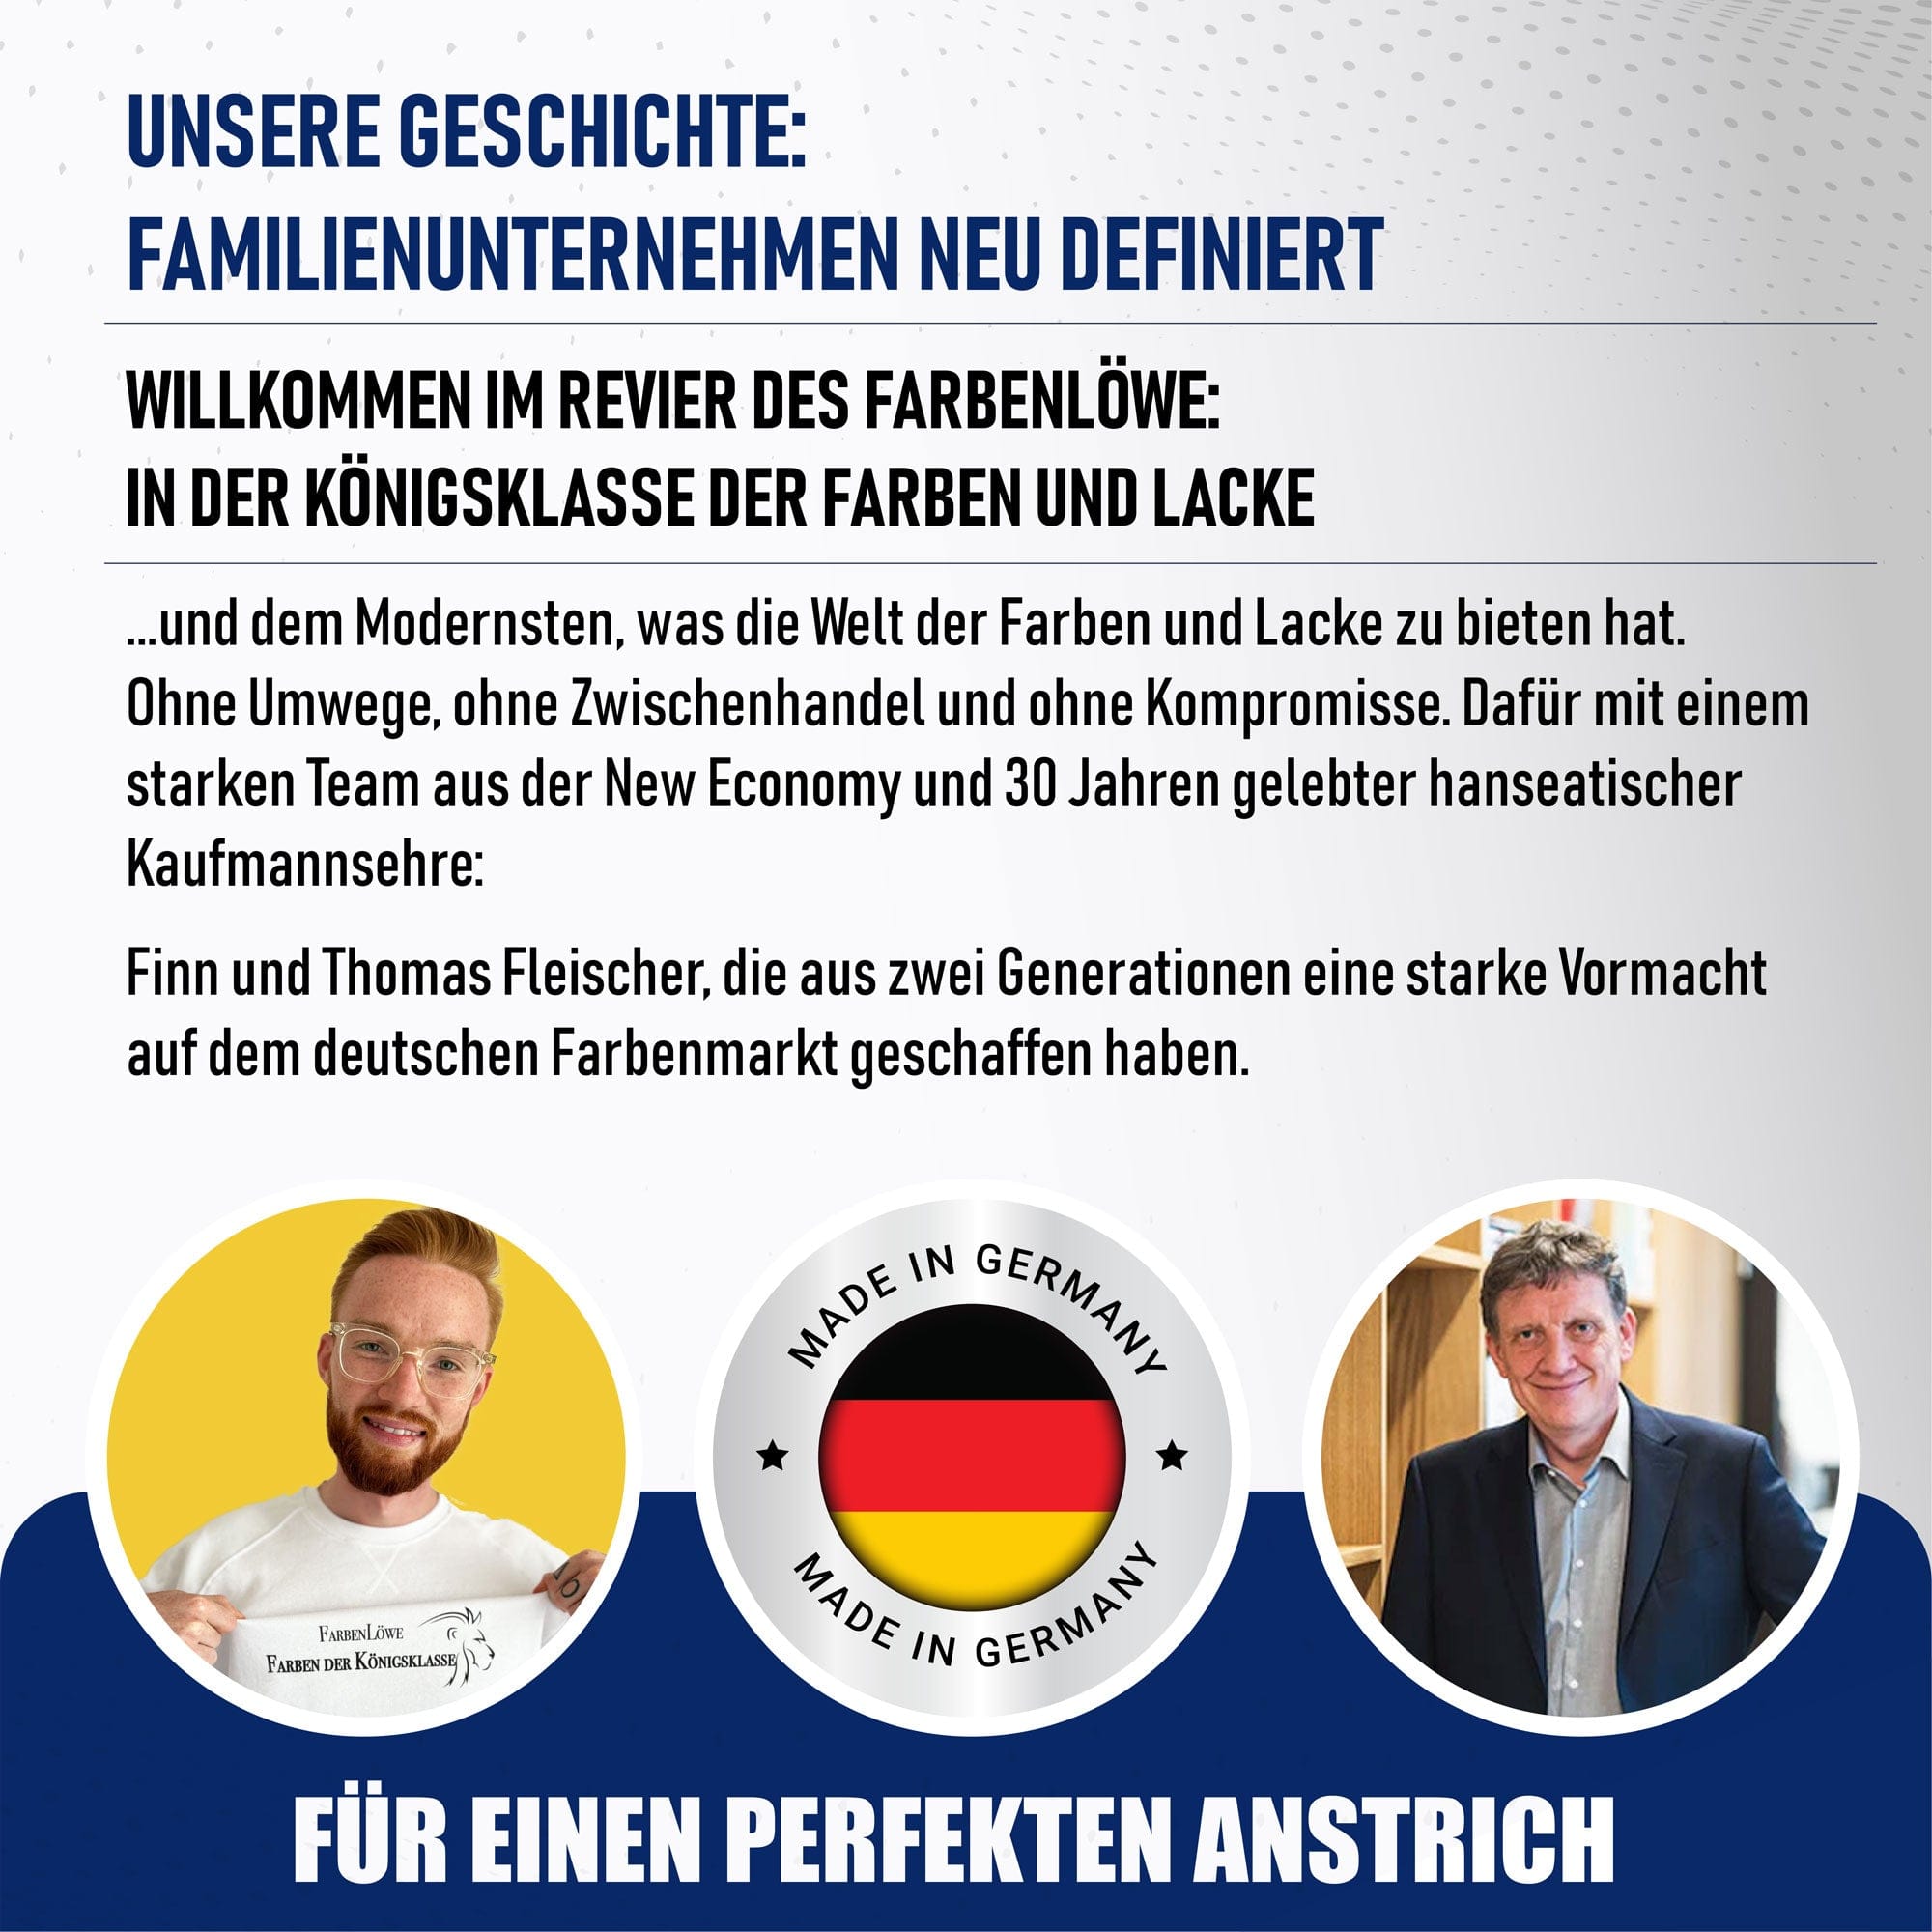 Hamburger Lack-Profi Lacke & Beschichtungen Hamburger Lack-Profi Fliesenlack Weiß RAL 9010 - hochdeckende Fliesenfarbe